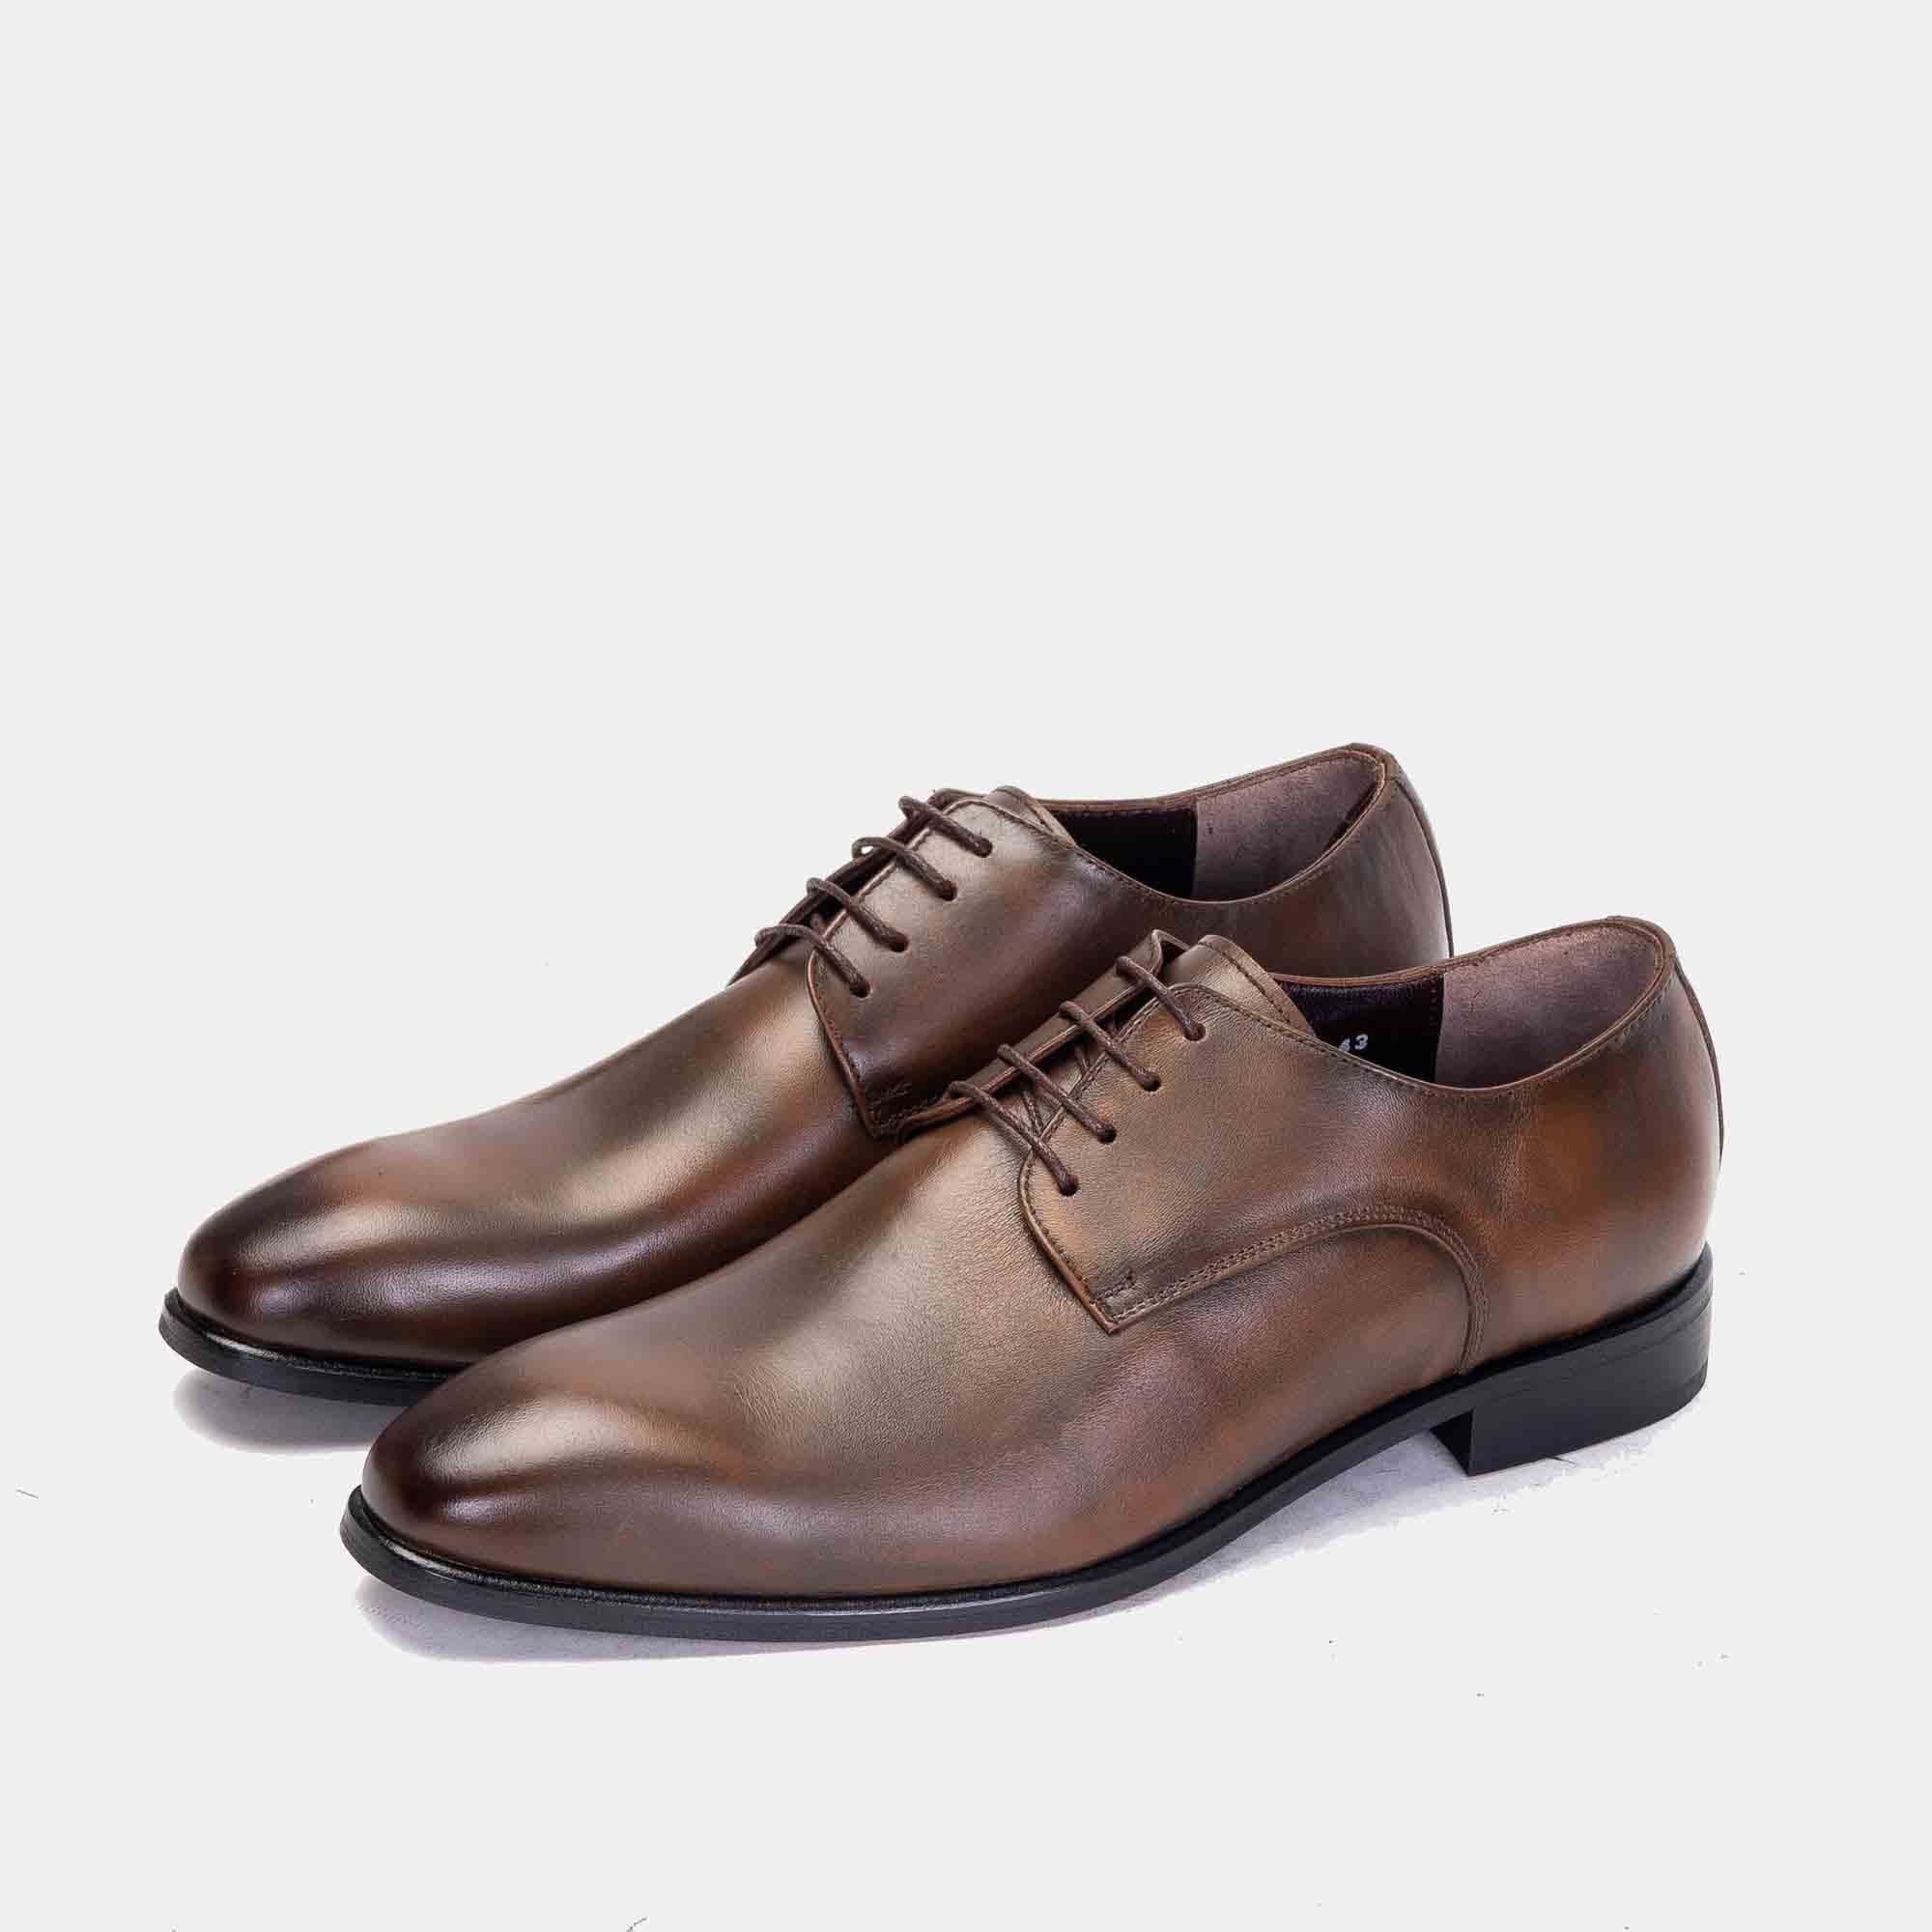 '1242 Chaussure en cuir Marron vintage